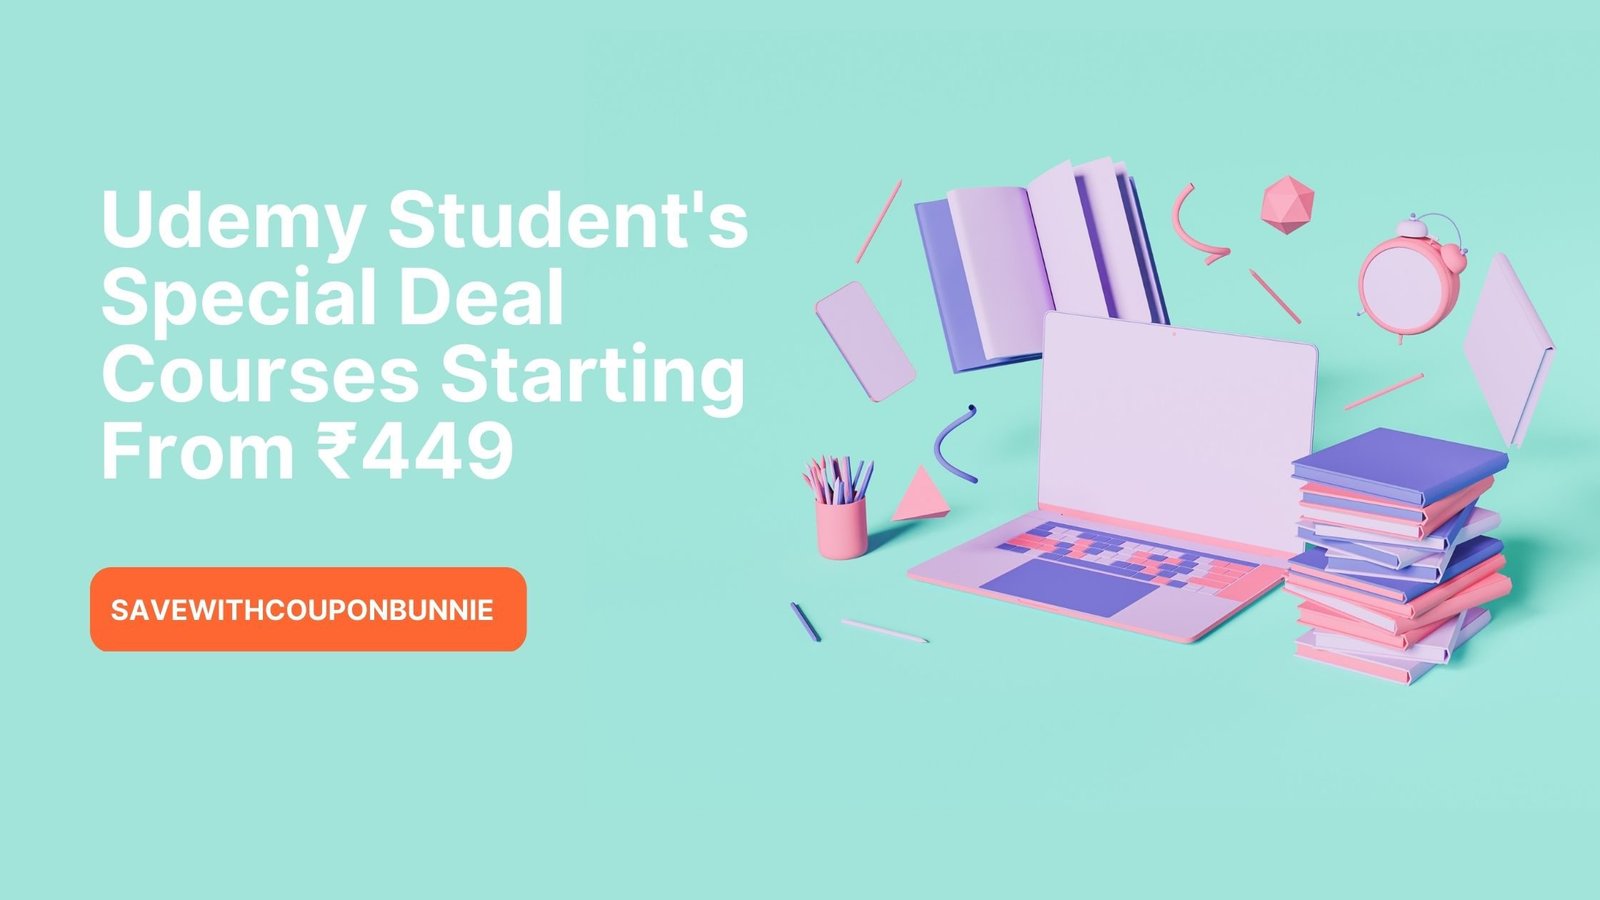 Udemy's student deals